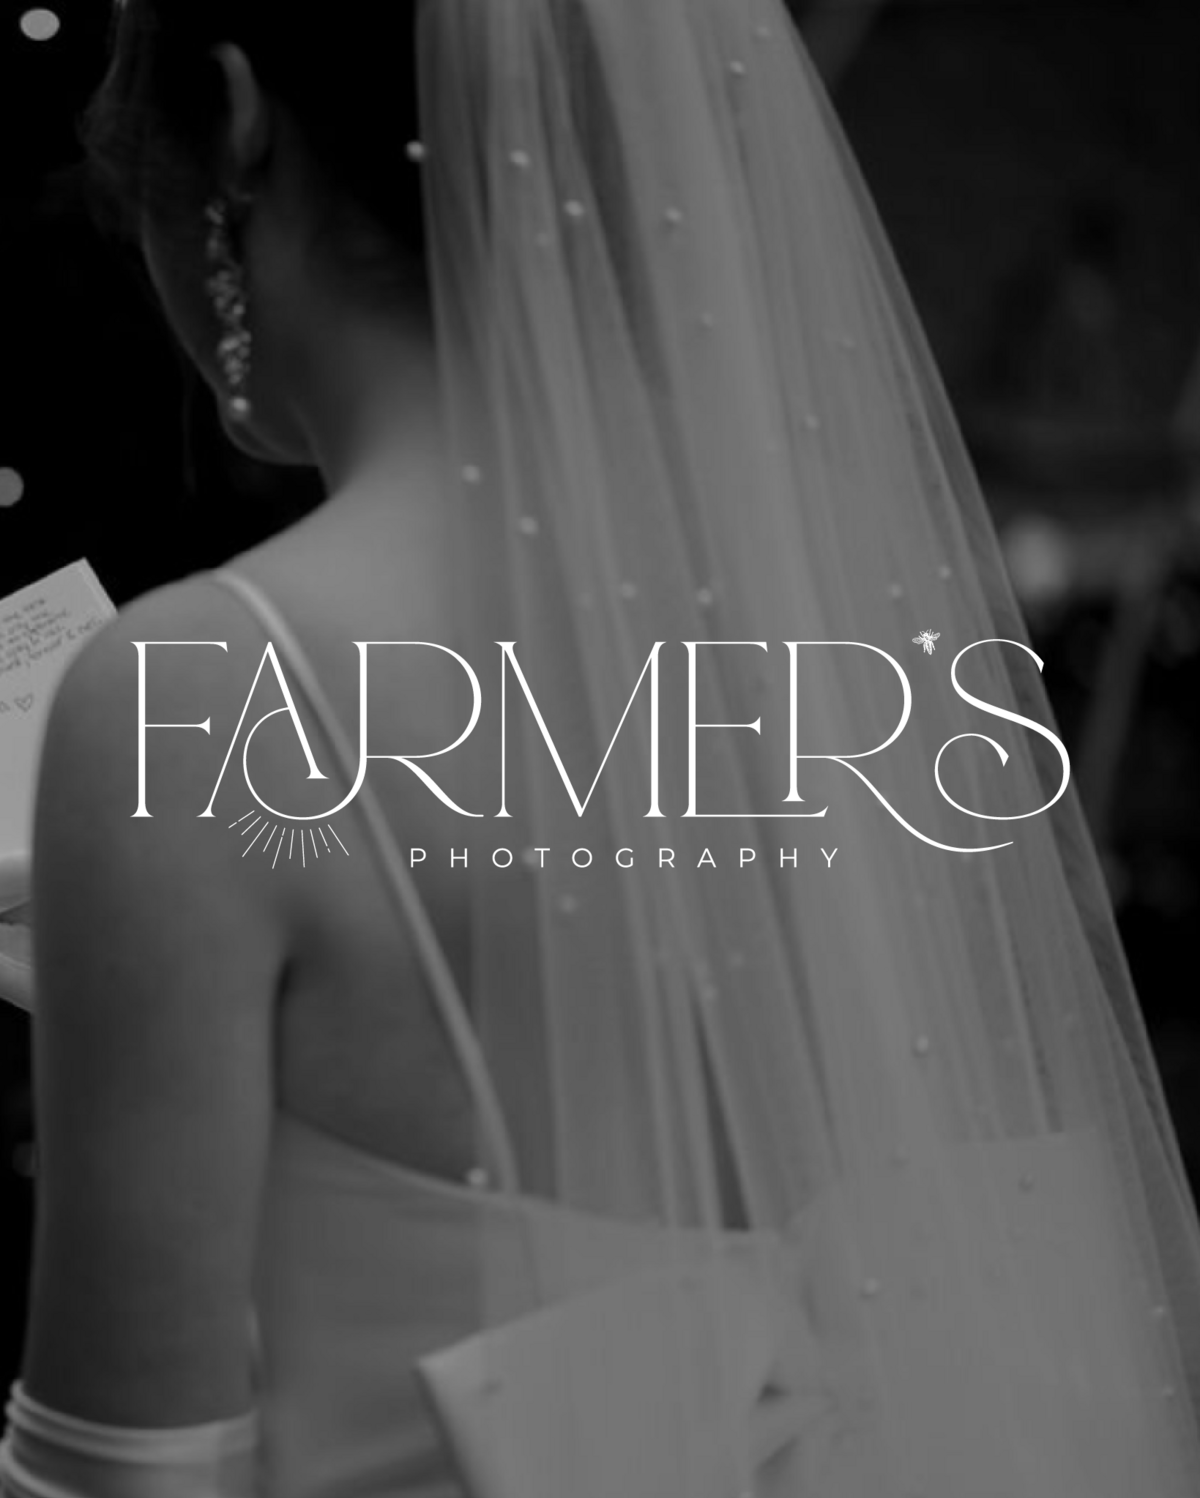 Farmer's Photography Logo